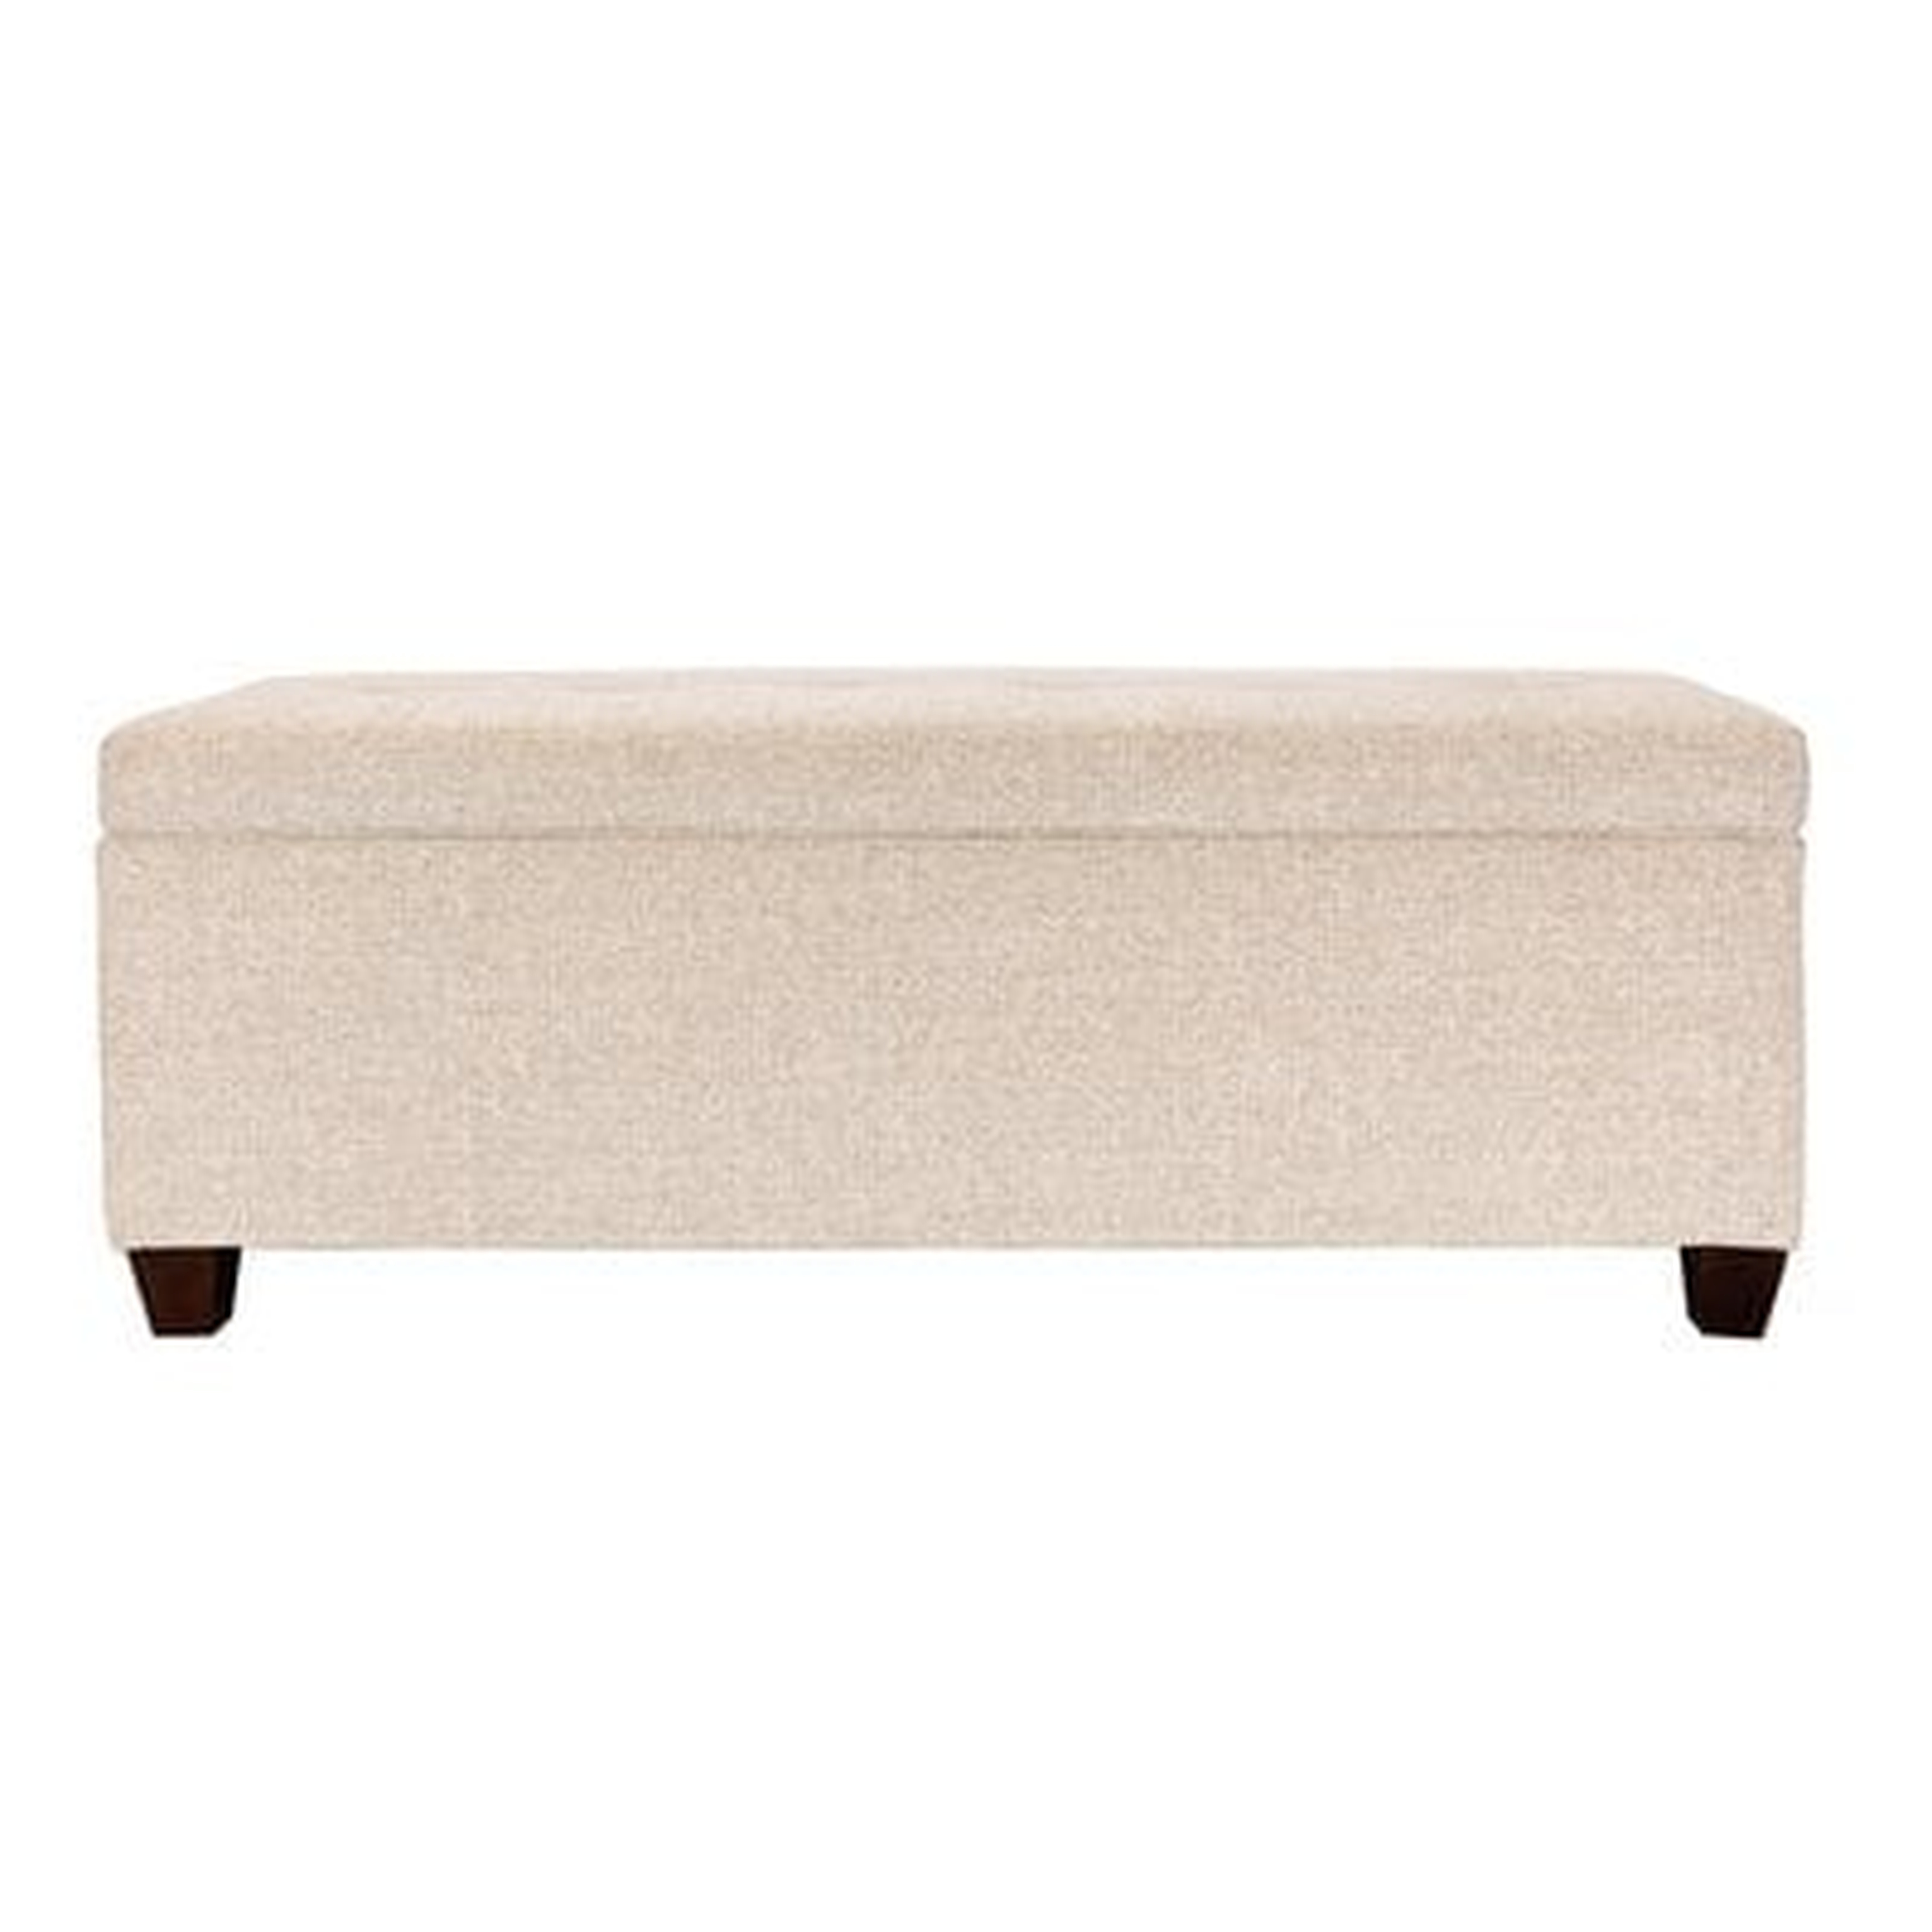 Lamanna Upholstered Storage Bench - Wayfair